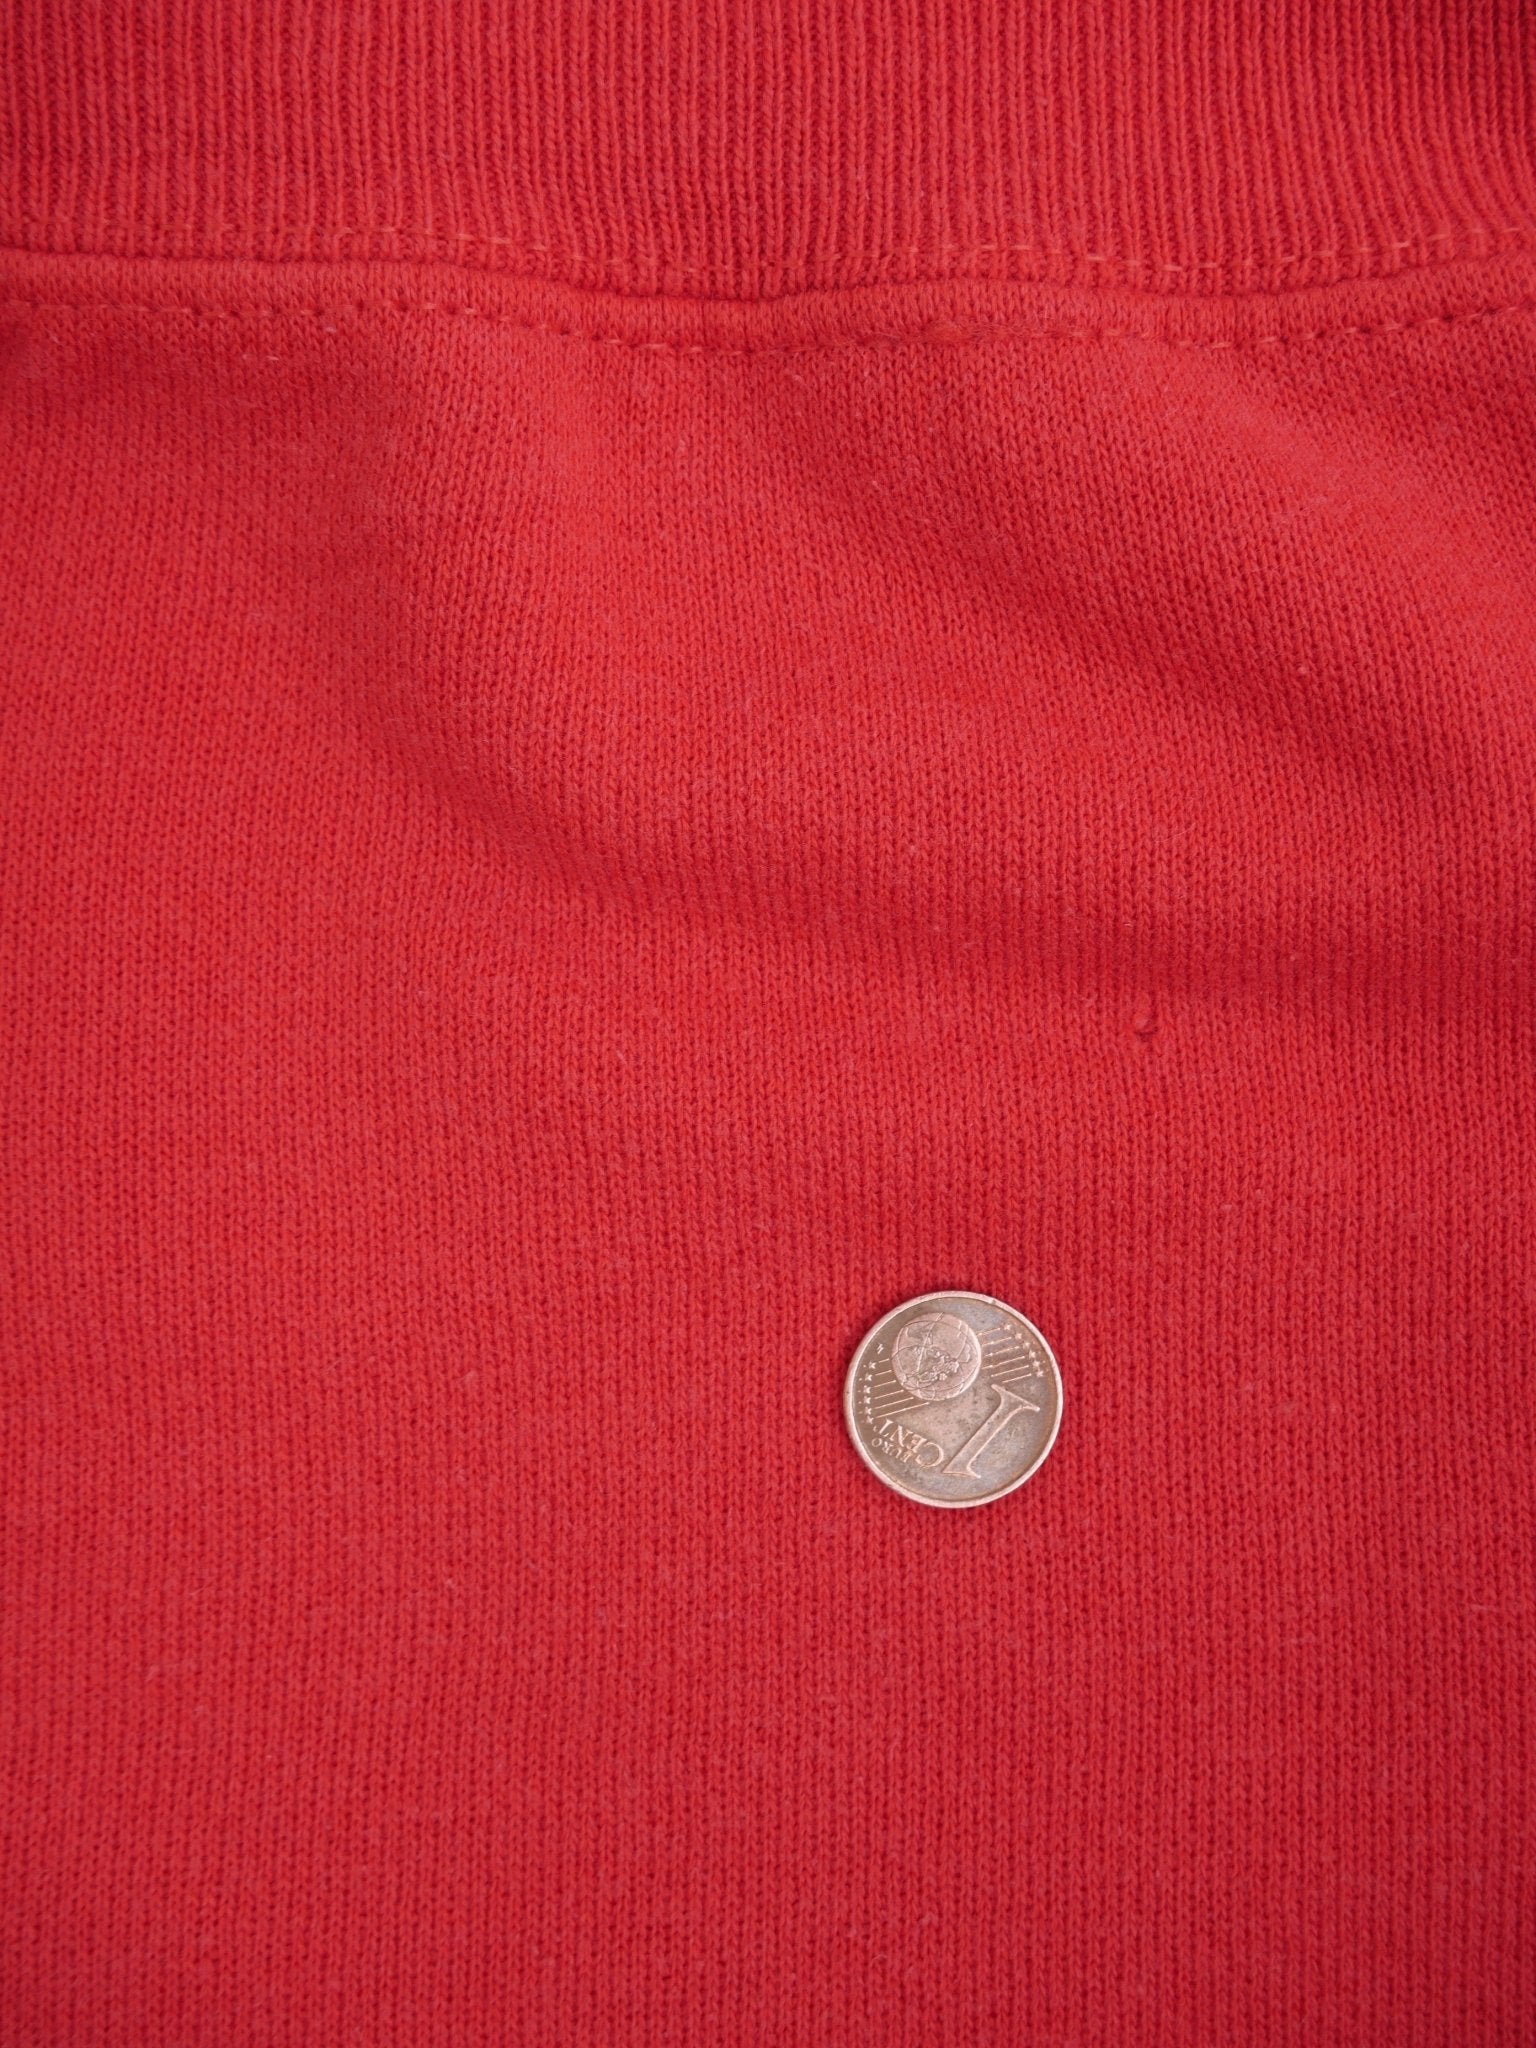 'Peep Powder' printed Graphic red Sweater - Peeces